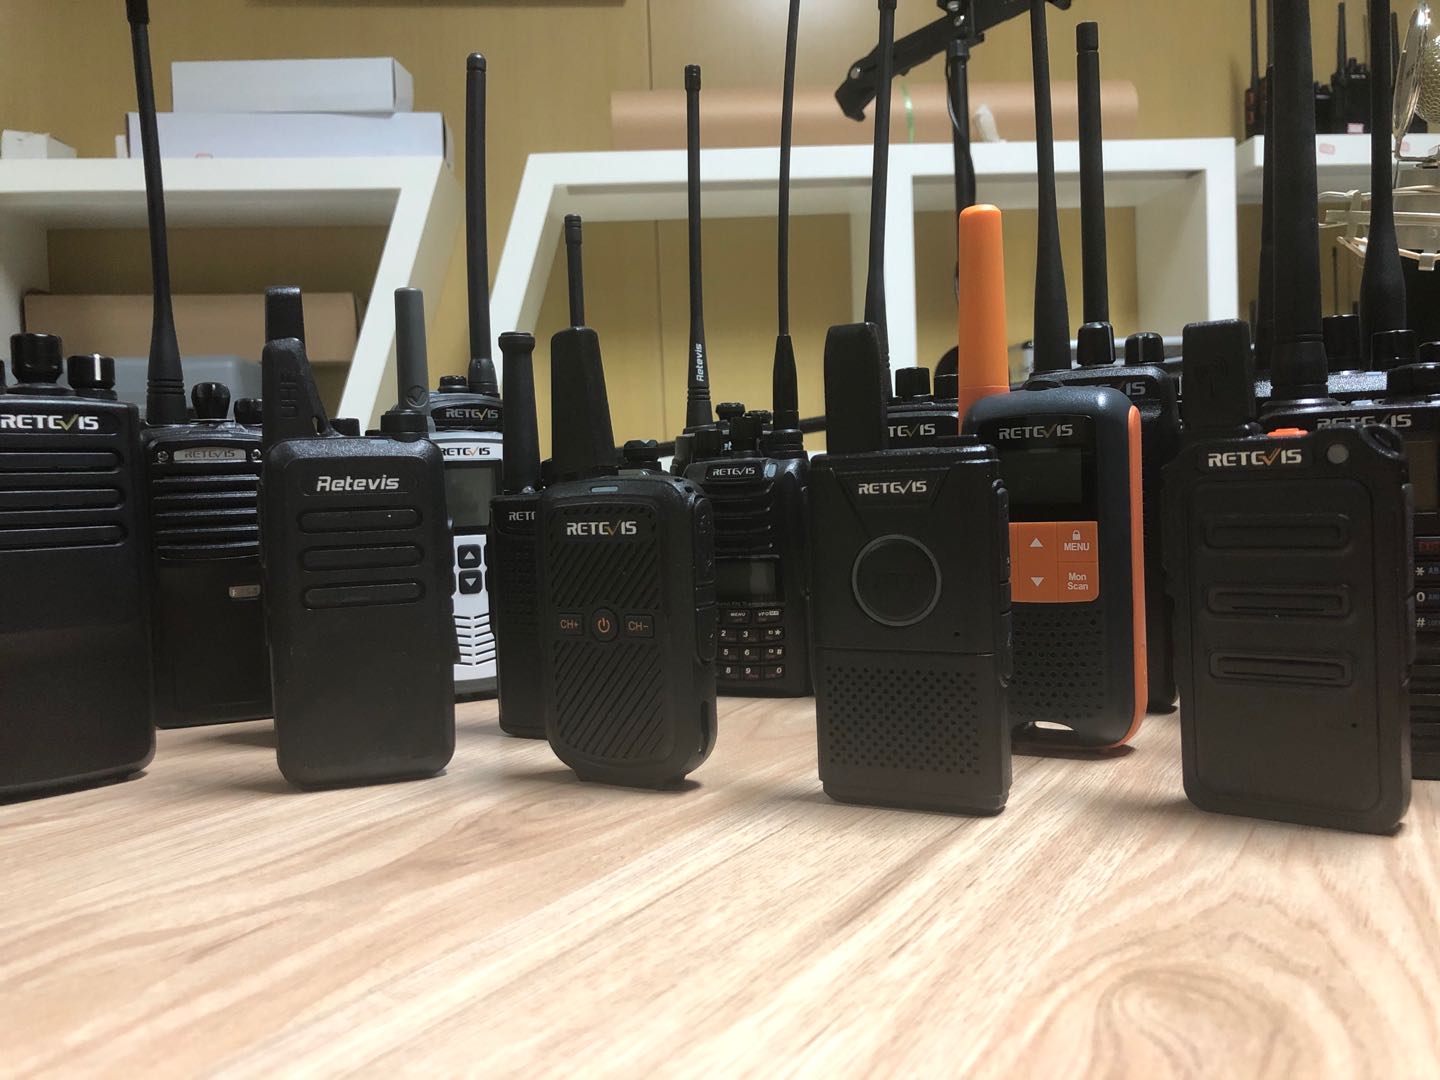 Retevis hot selling walkie talkies from customer